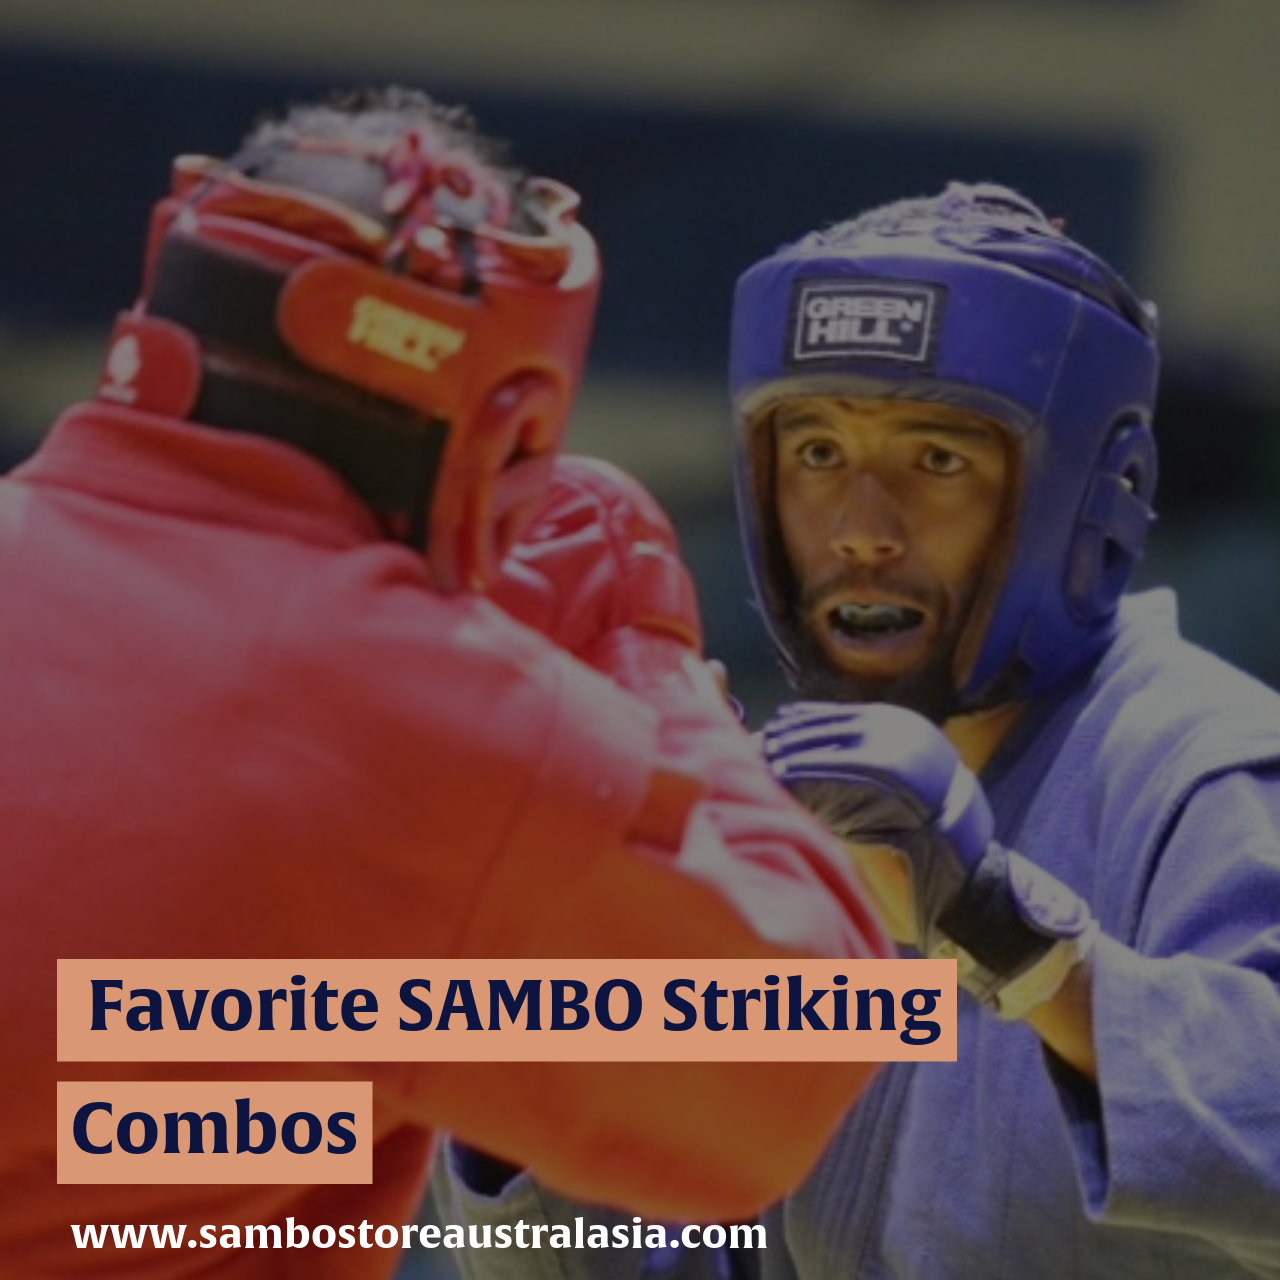 Our Favorite SAMBO Striking Combos